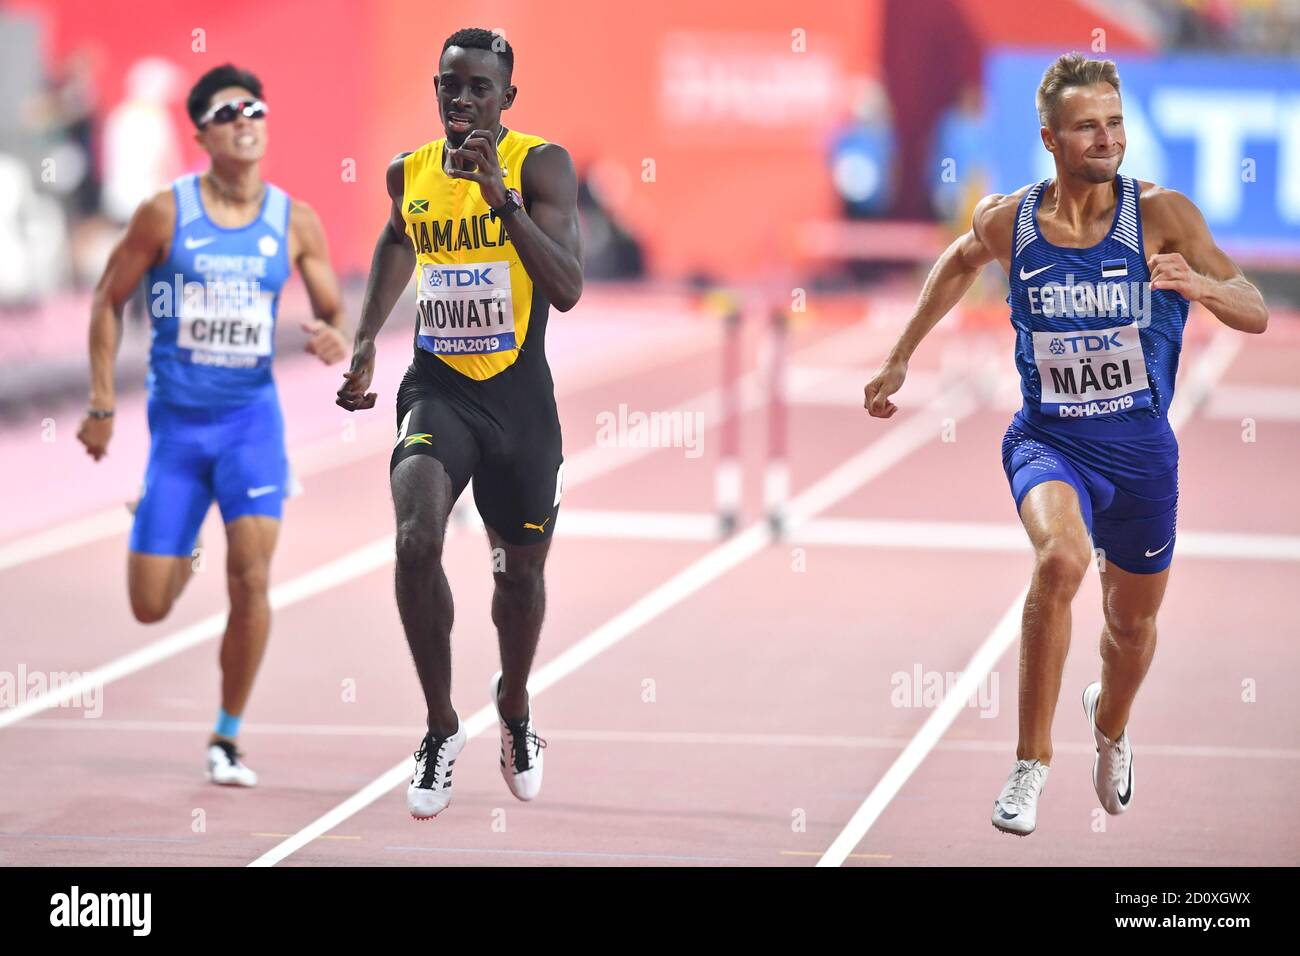 Rasmus Magi (Estonia), Kemar Mowatt (Jamaica), Chieh Chen (Taipei). 400 metres hurdles, Semi final. IAAF World Athletics Championships, Doha 2019 Stock Photo